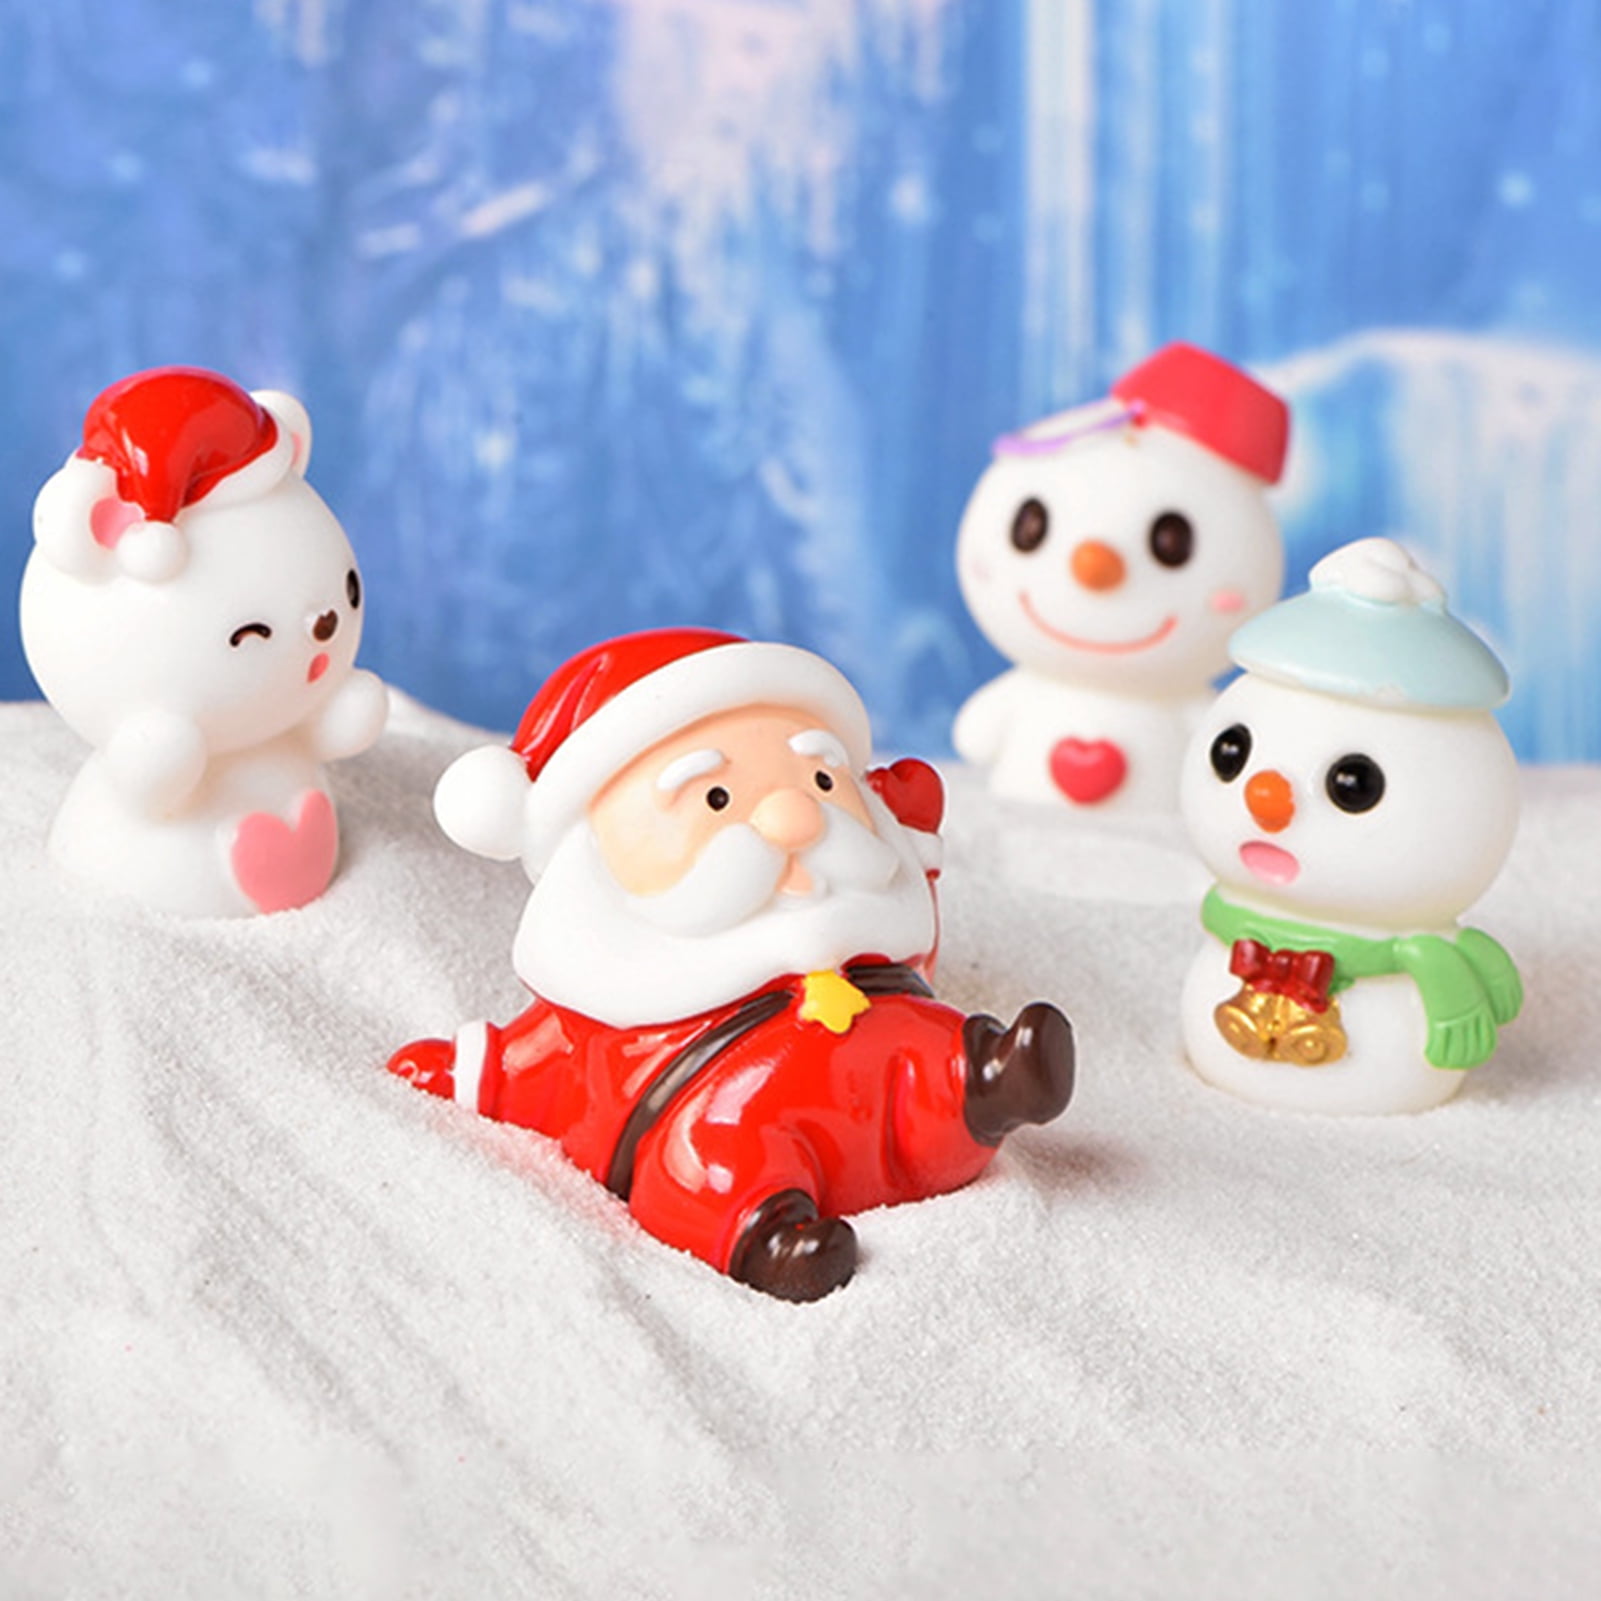 Mini Santa Claus Snowman Bonsai Garden Fairy Decoration: DIY Glass Craft  Perfect Home Decoration Gift Set From Lianwu05, $3.61